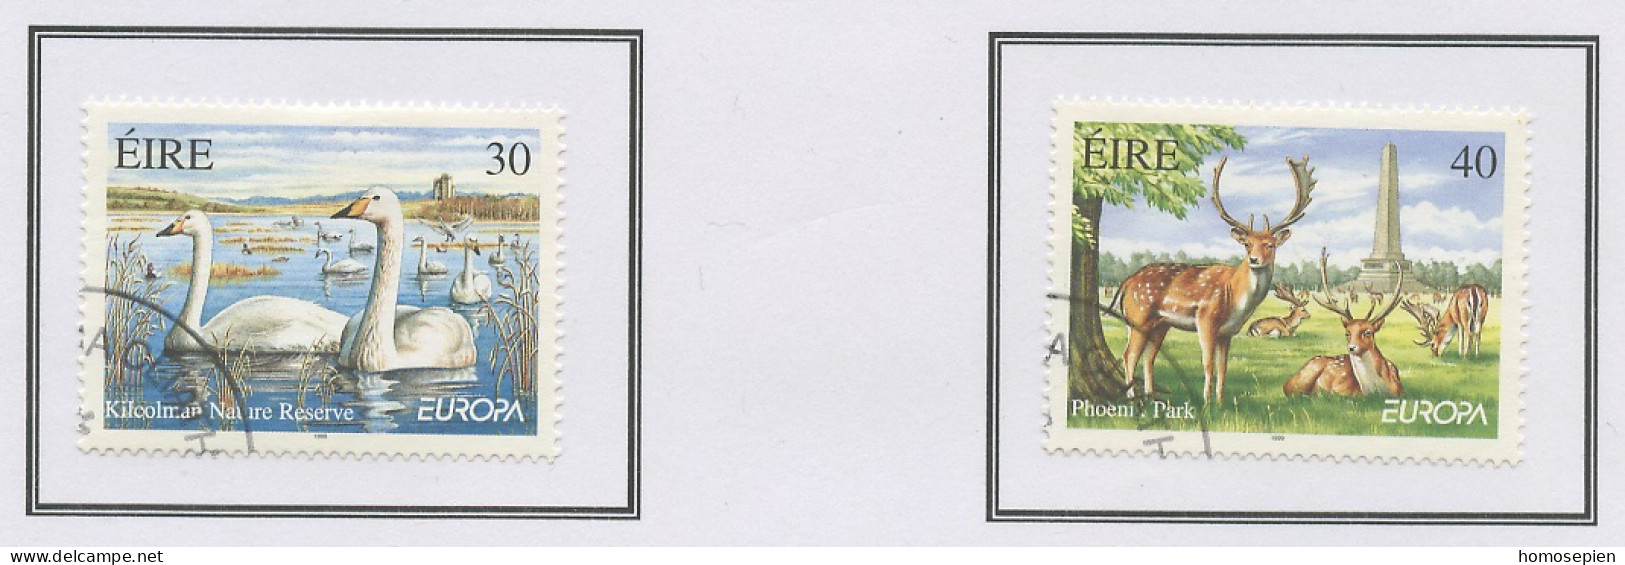 Irlande - Ireland - Irland 1999 Y&T N°1145 à 1146 - Michel N°1141 à 1142 (o) - EUROPA - Autoadhésif - Used Stamps